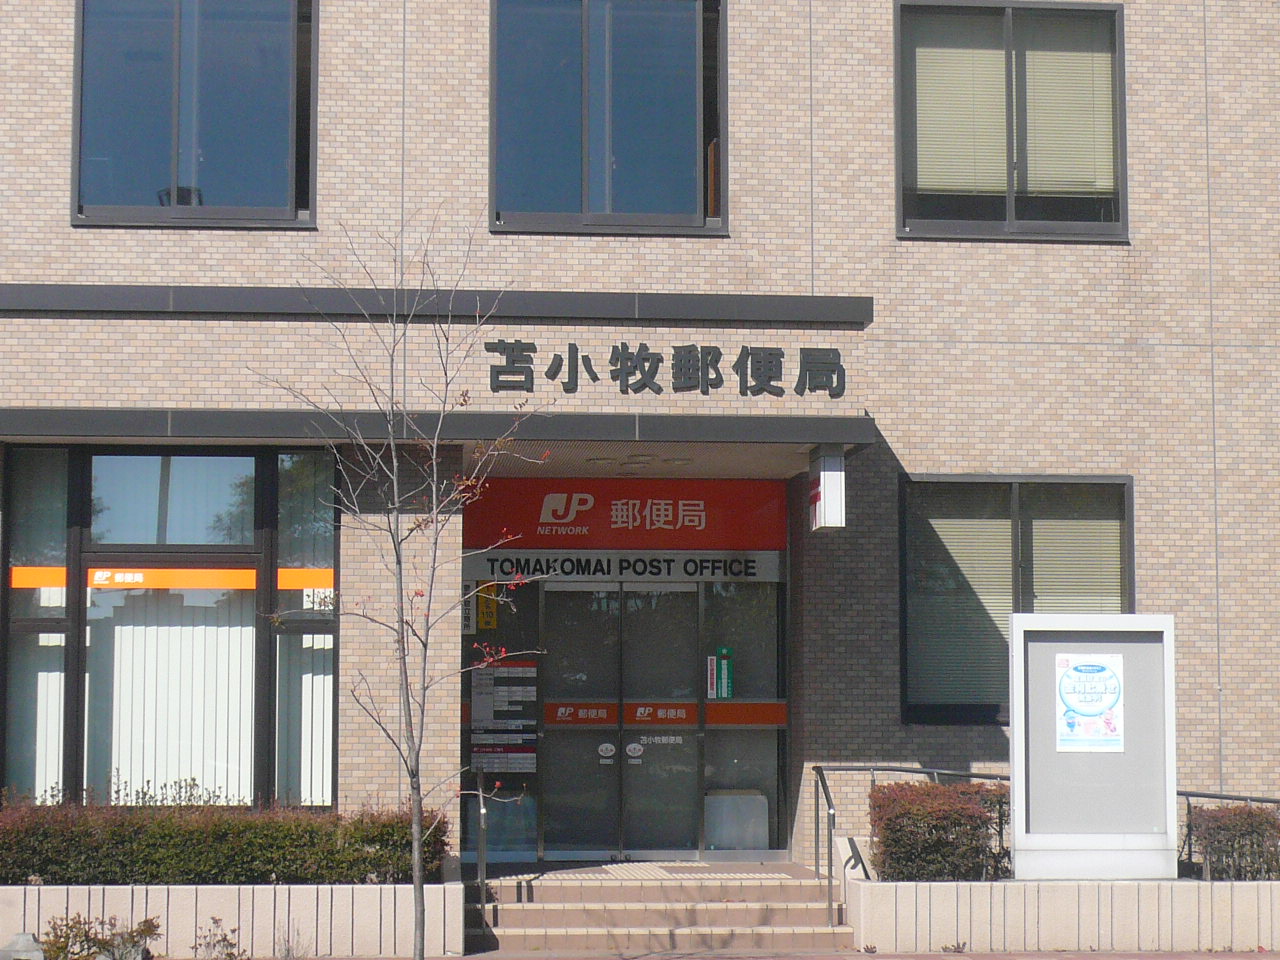 post office. 1191m to Tomakomai post office (post office)